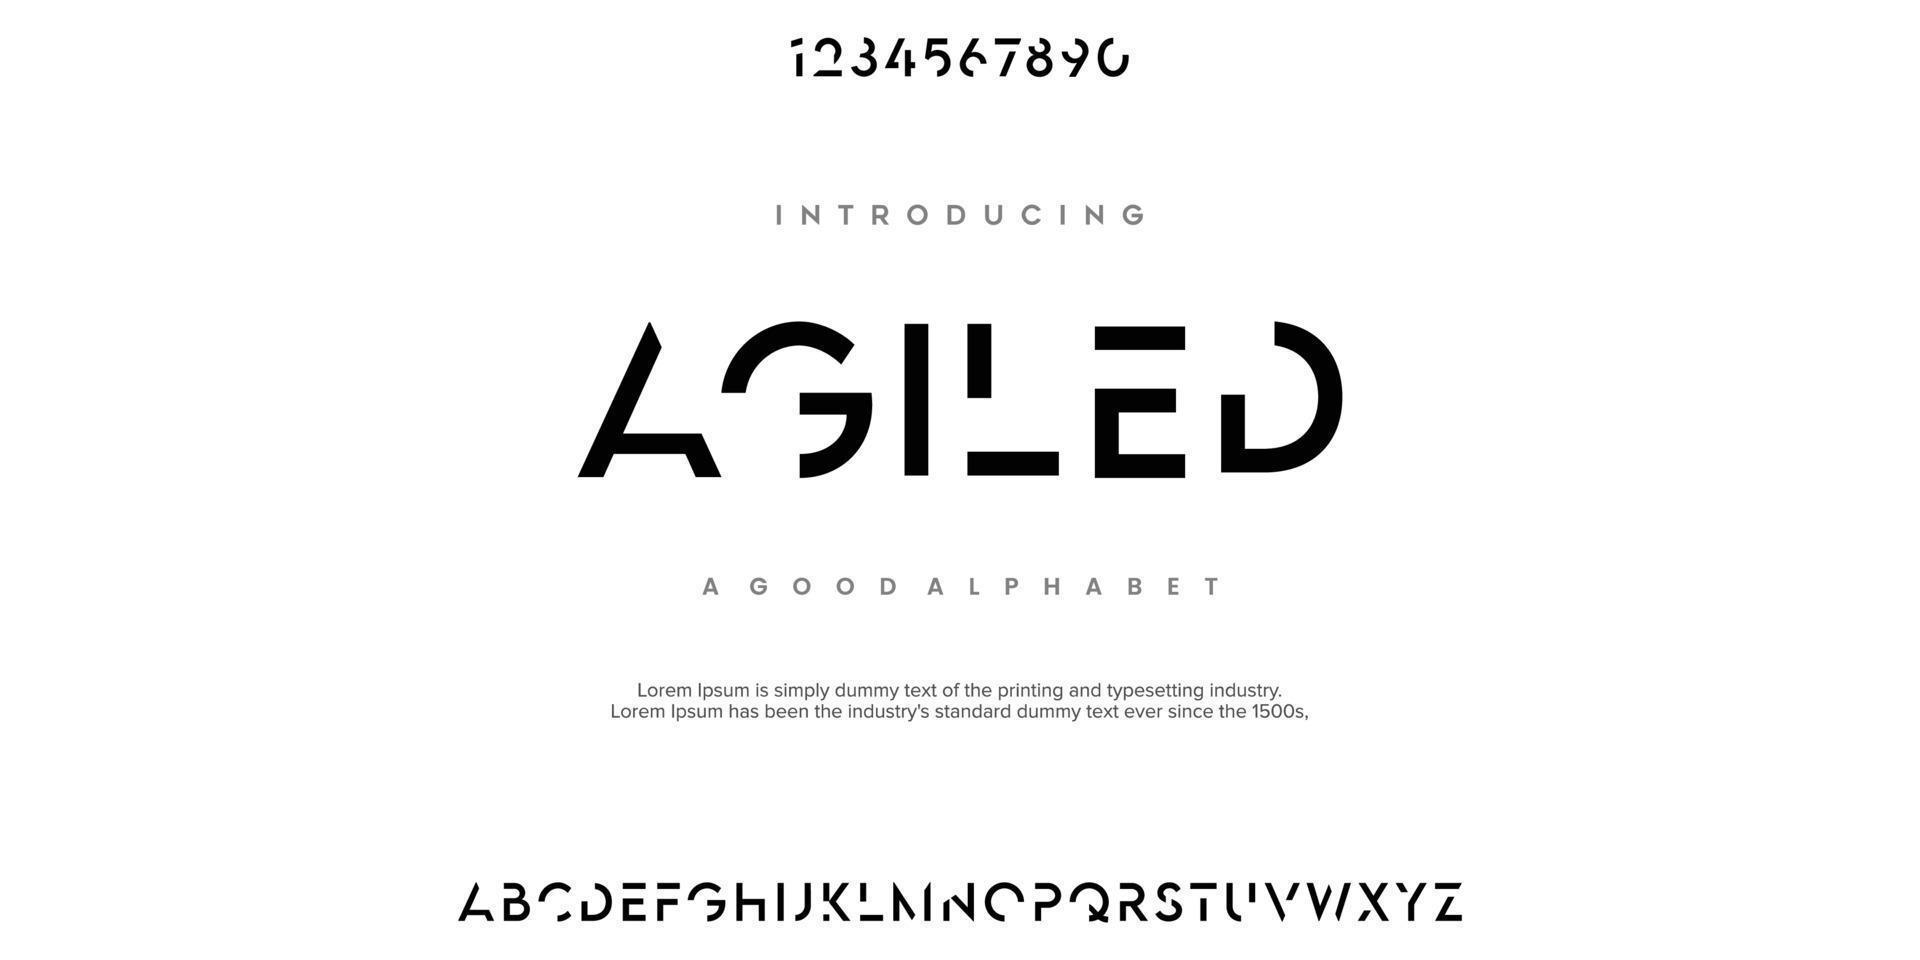 AGILED Modern minimal abstract alphabet fonts. Typography technology, electronic, movie, digital, music, future, logo creative font. vector illustration